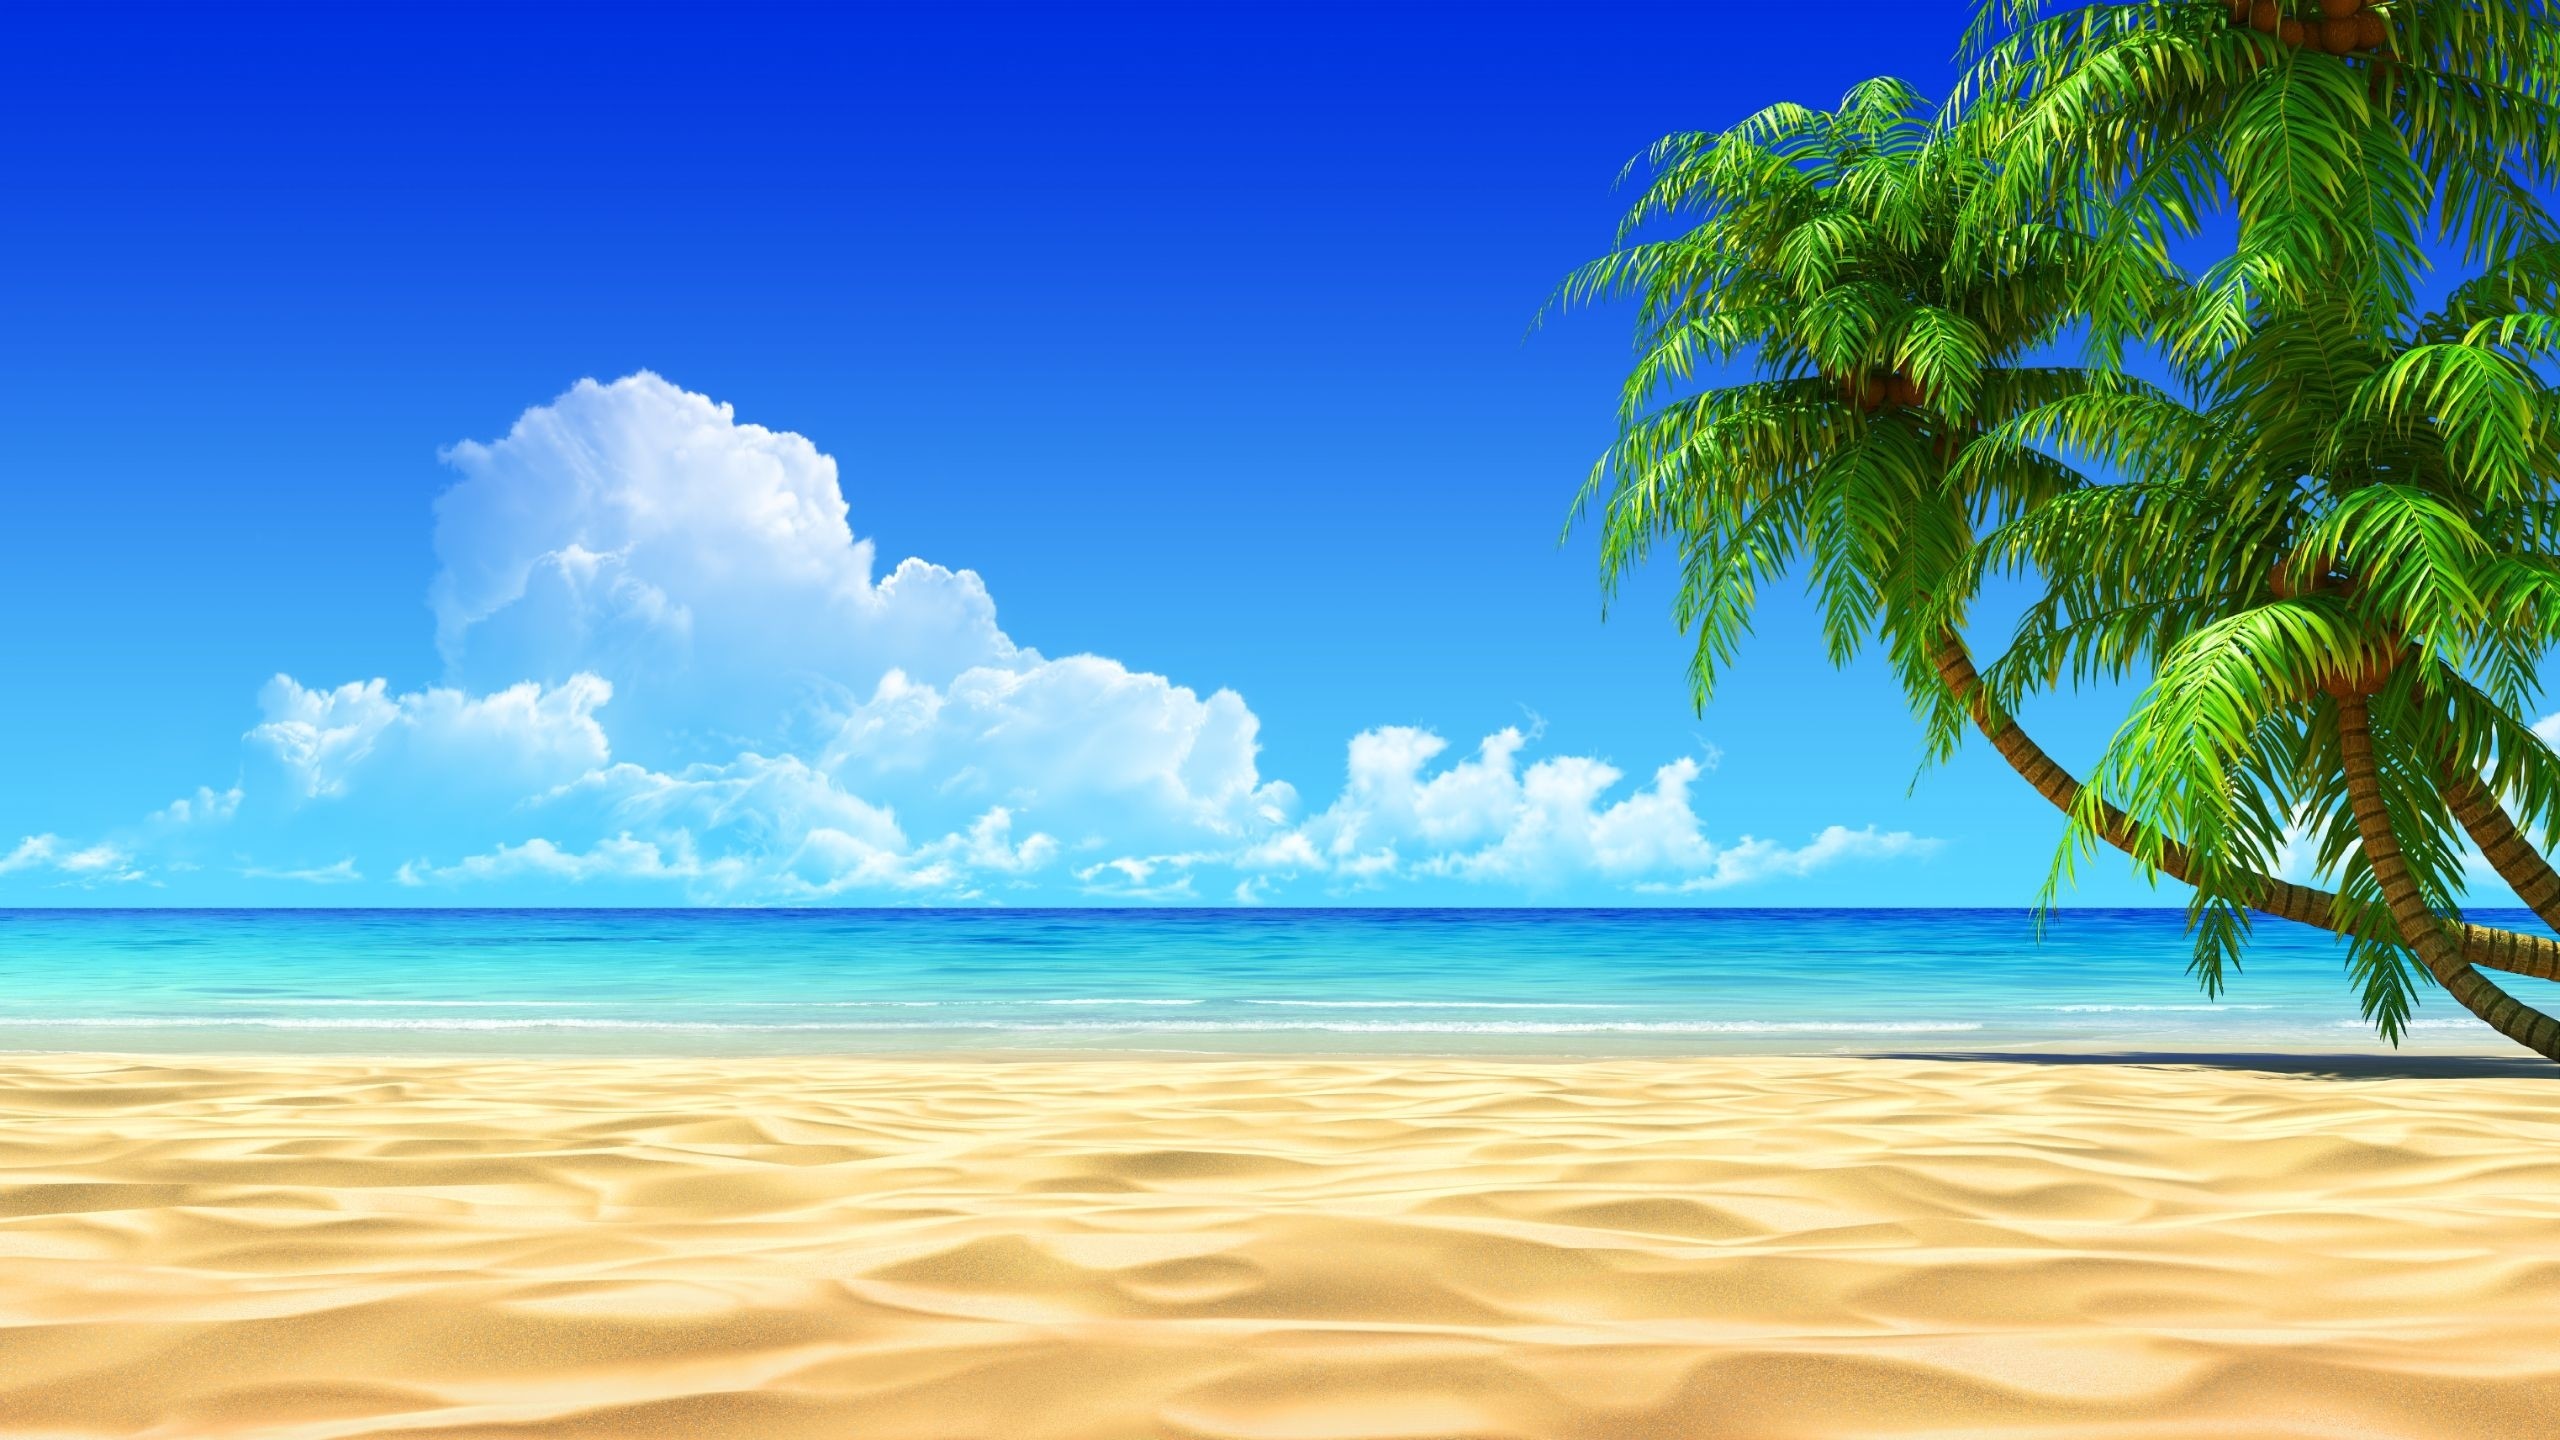 2560x1440 10 Top Beach Palm Tree Background FULL HD 1920Ã1080 For PC Background